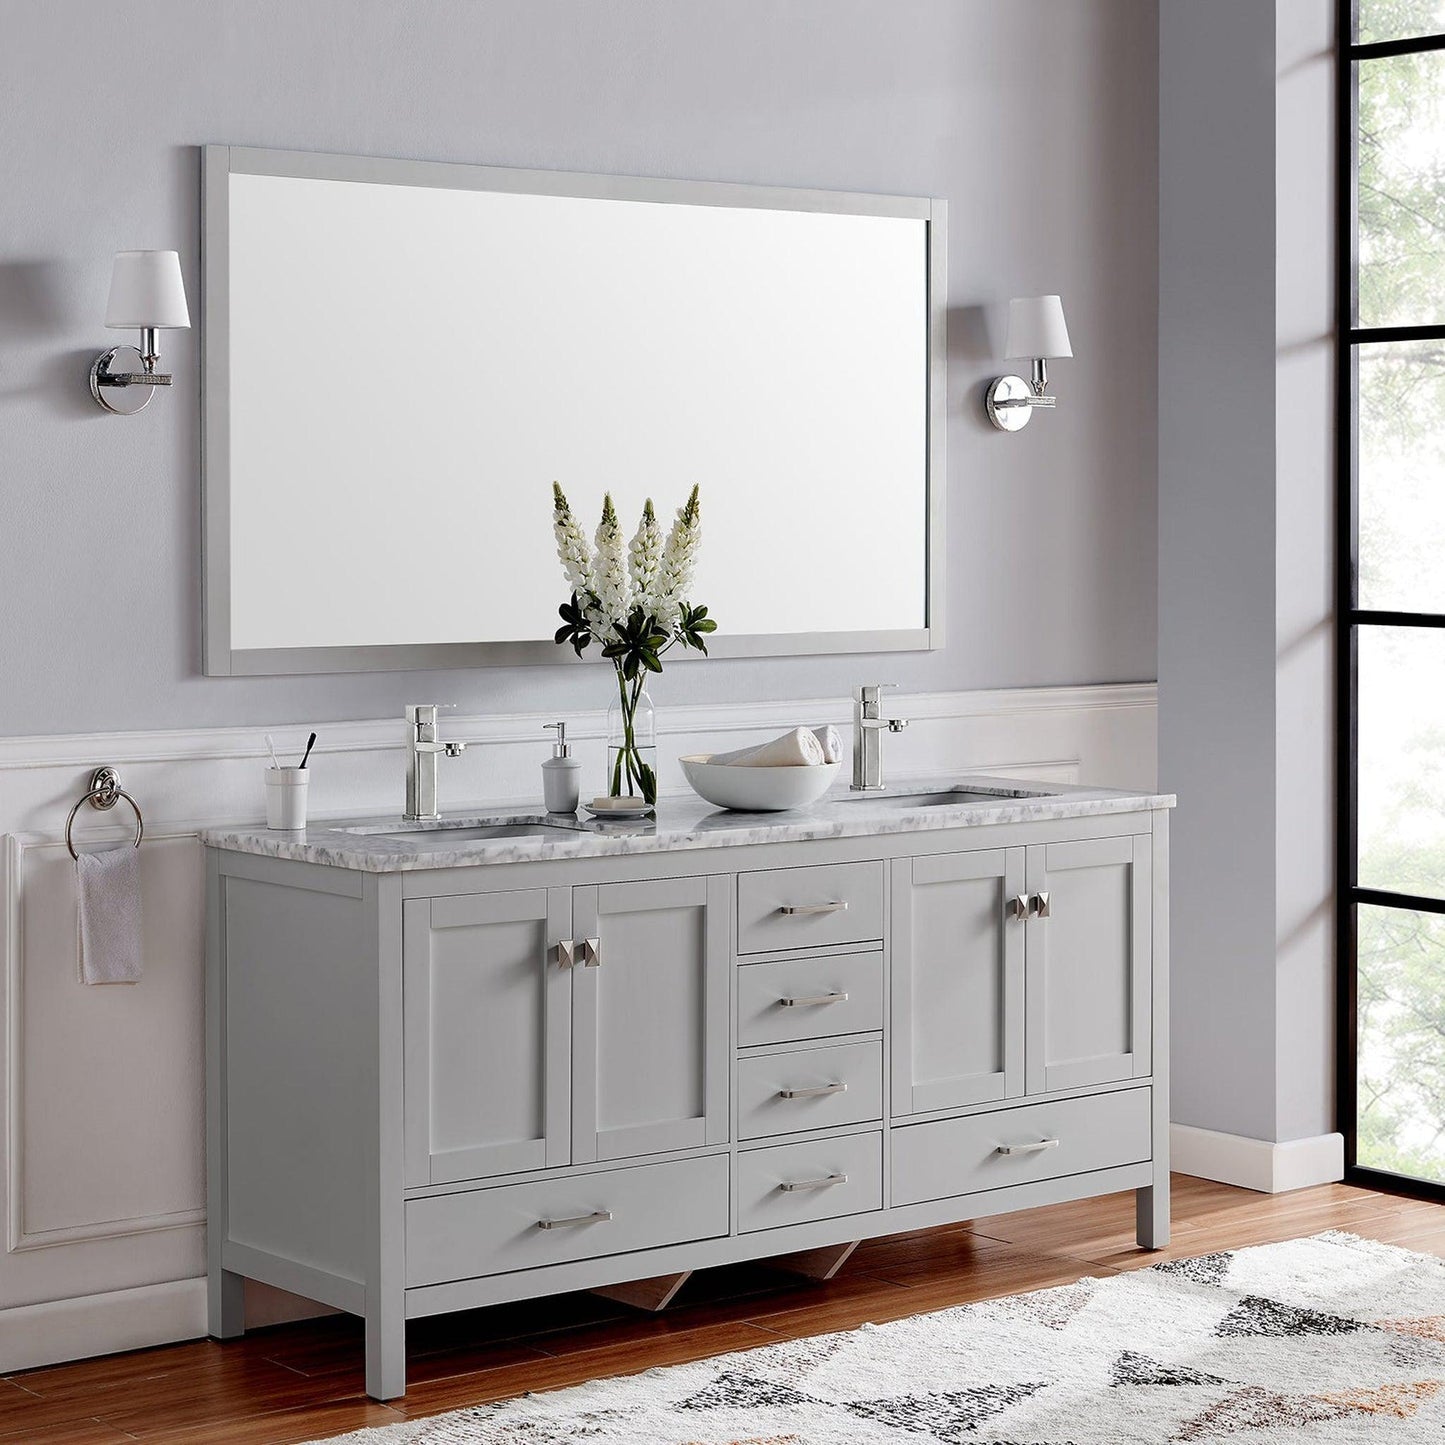 Eviva London 60" x 34" Gray Freestanding Bathroom Vanity With Carrara Marble Countertop and Double Undermount Sink